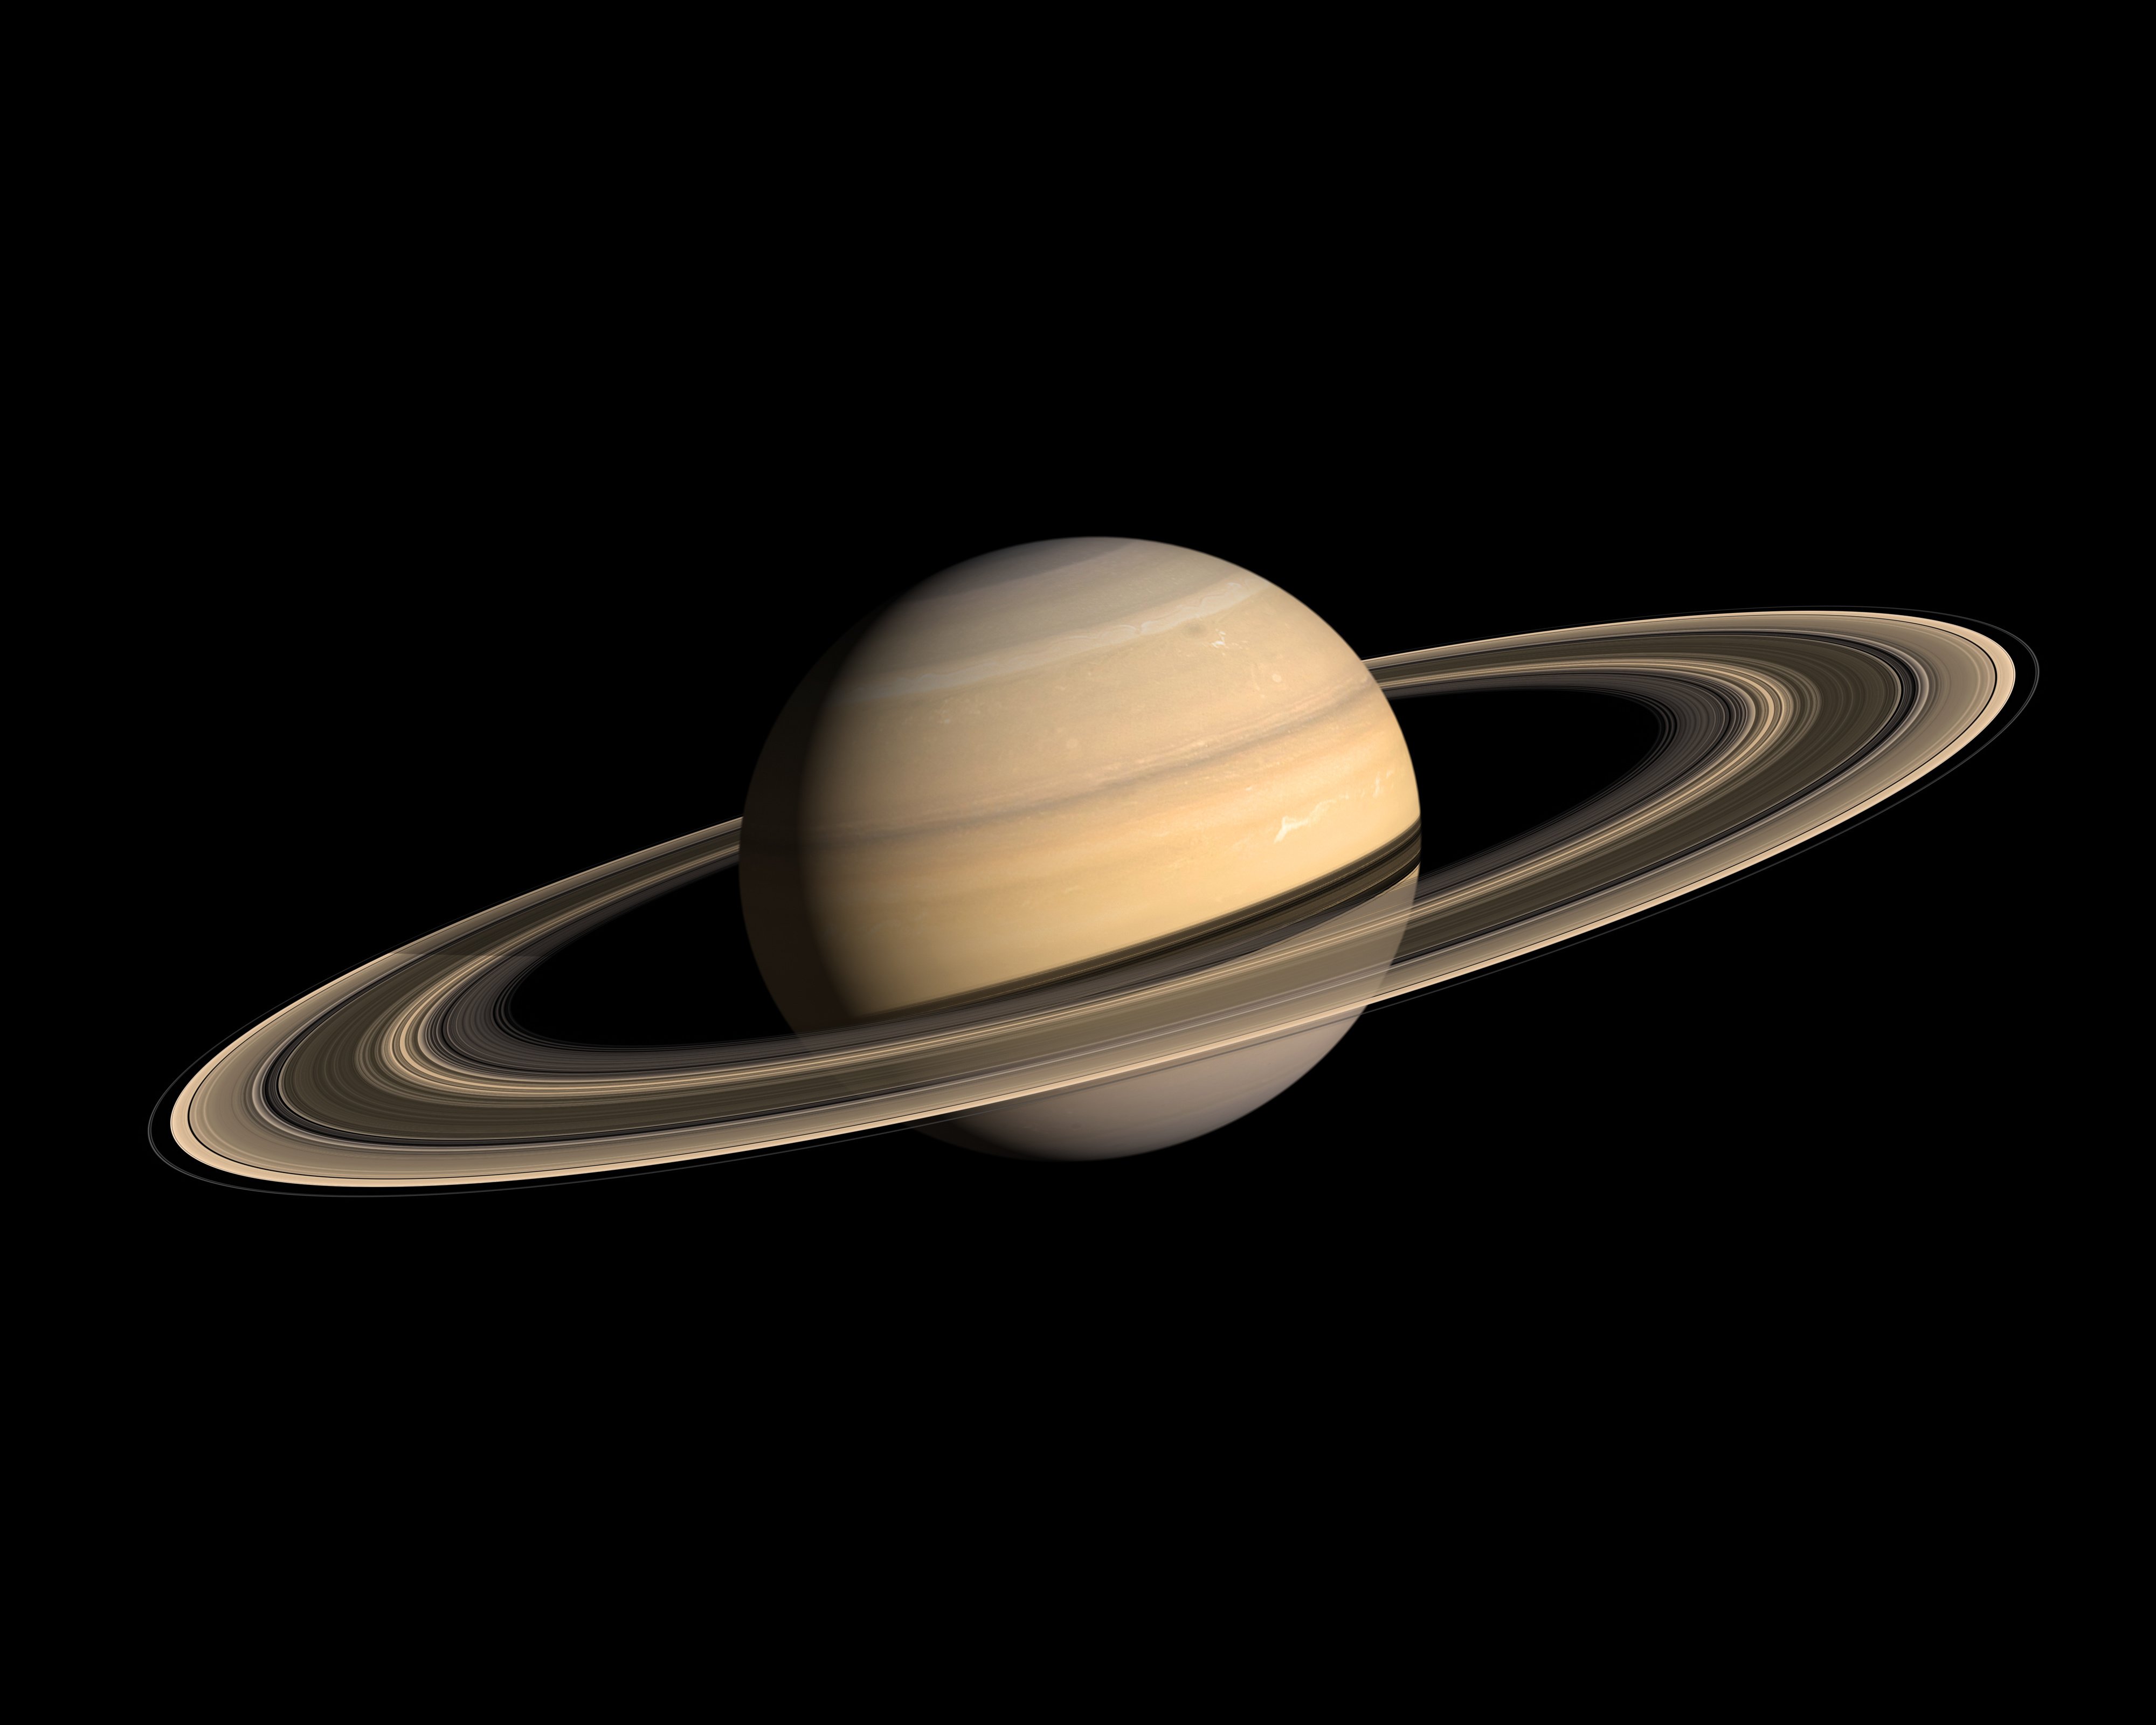 Планета Сатурн на английском. Люстра в виде планеты Сатурн. Freedom Saturn. Распечатать а2 планету Сатурн.